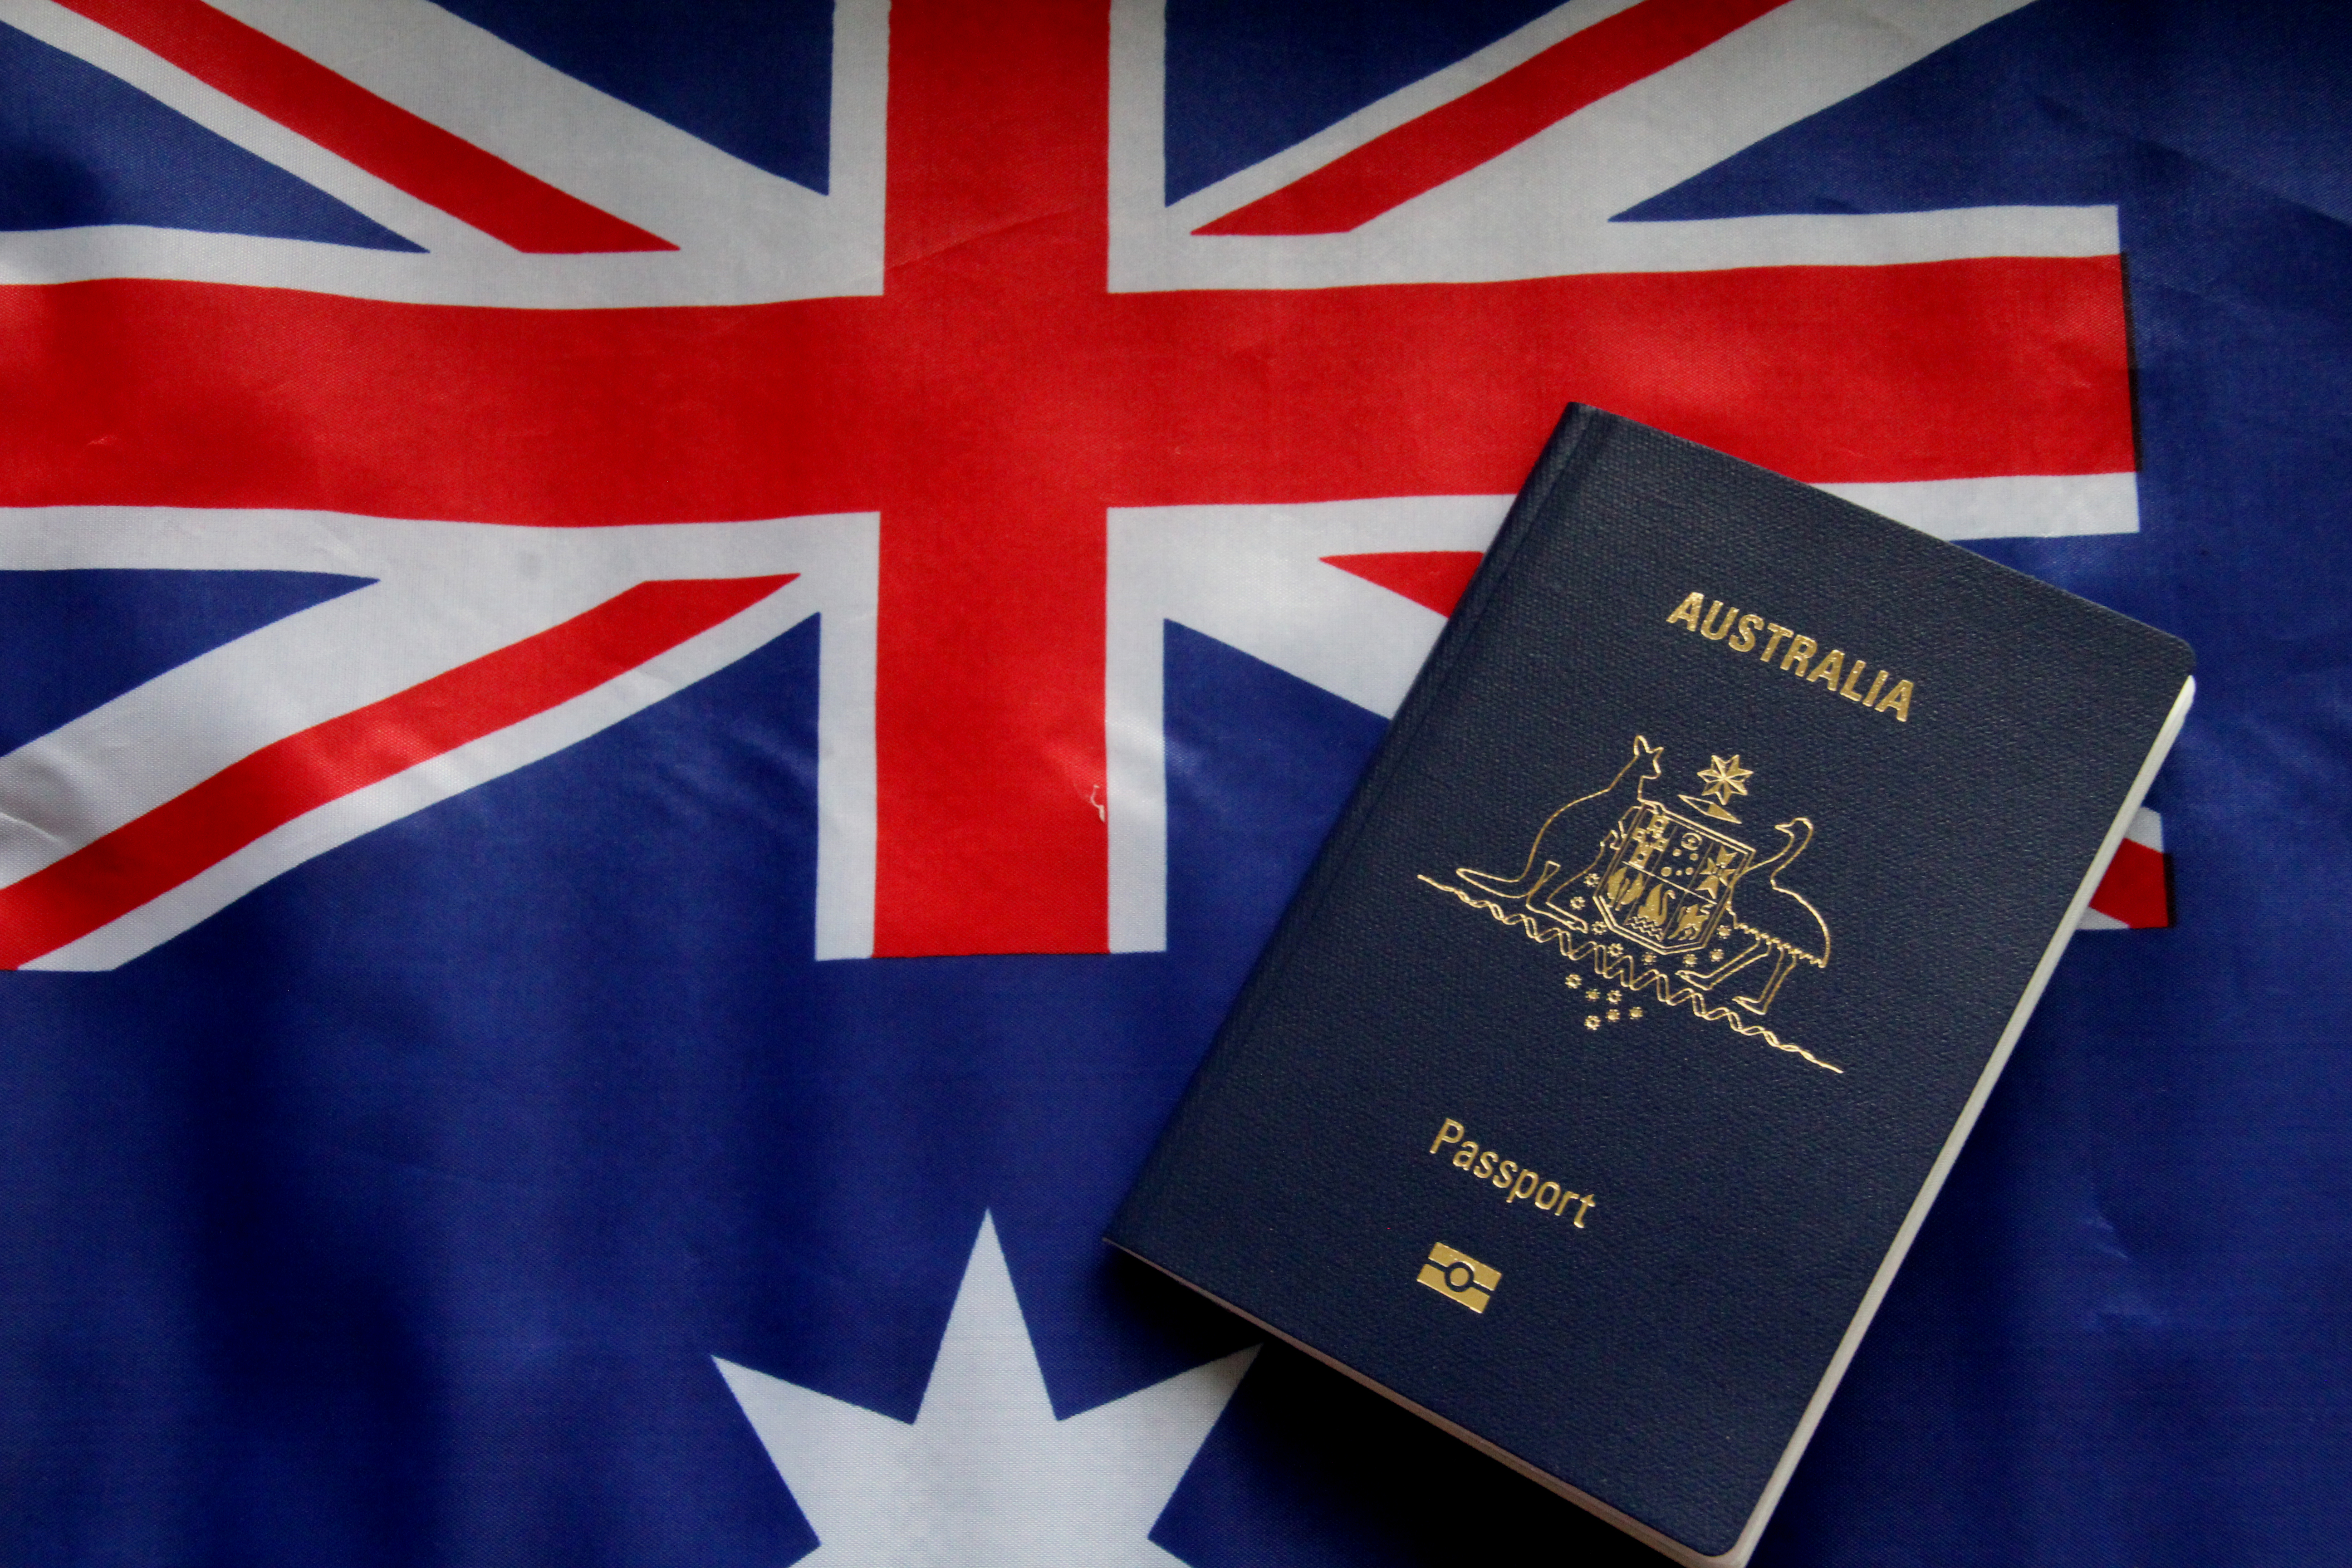 паспорт в австралии